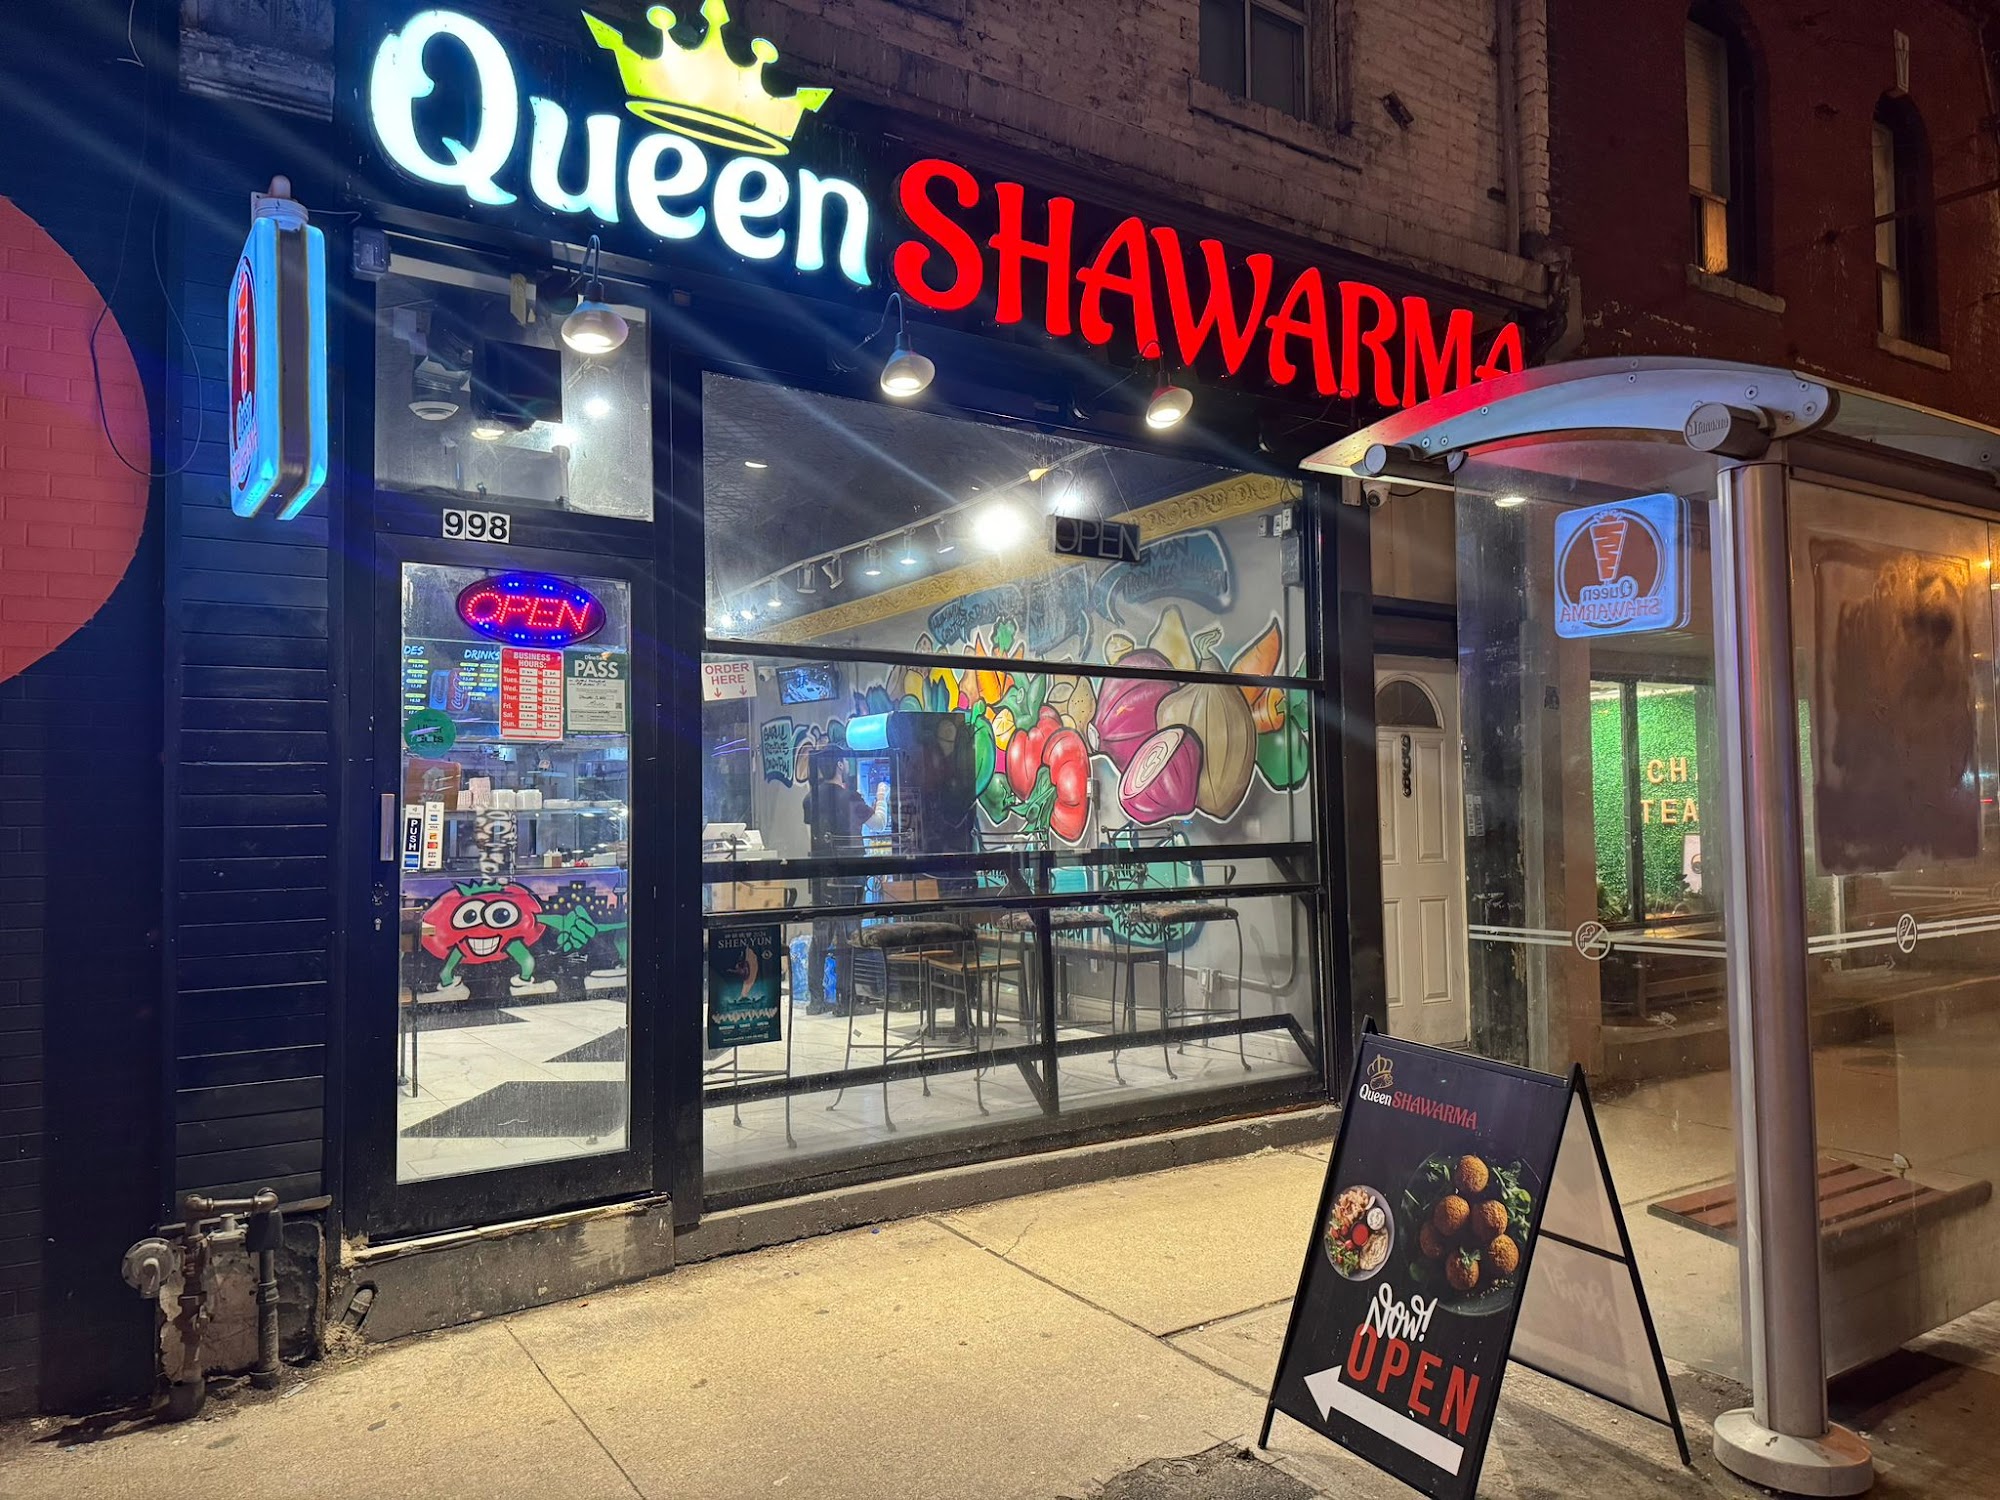 Queen Shawarma